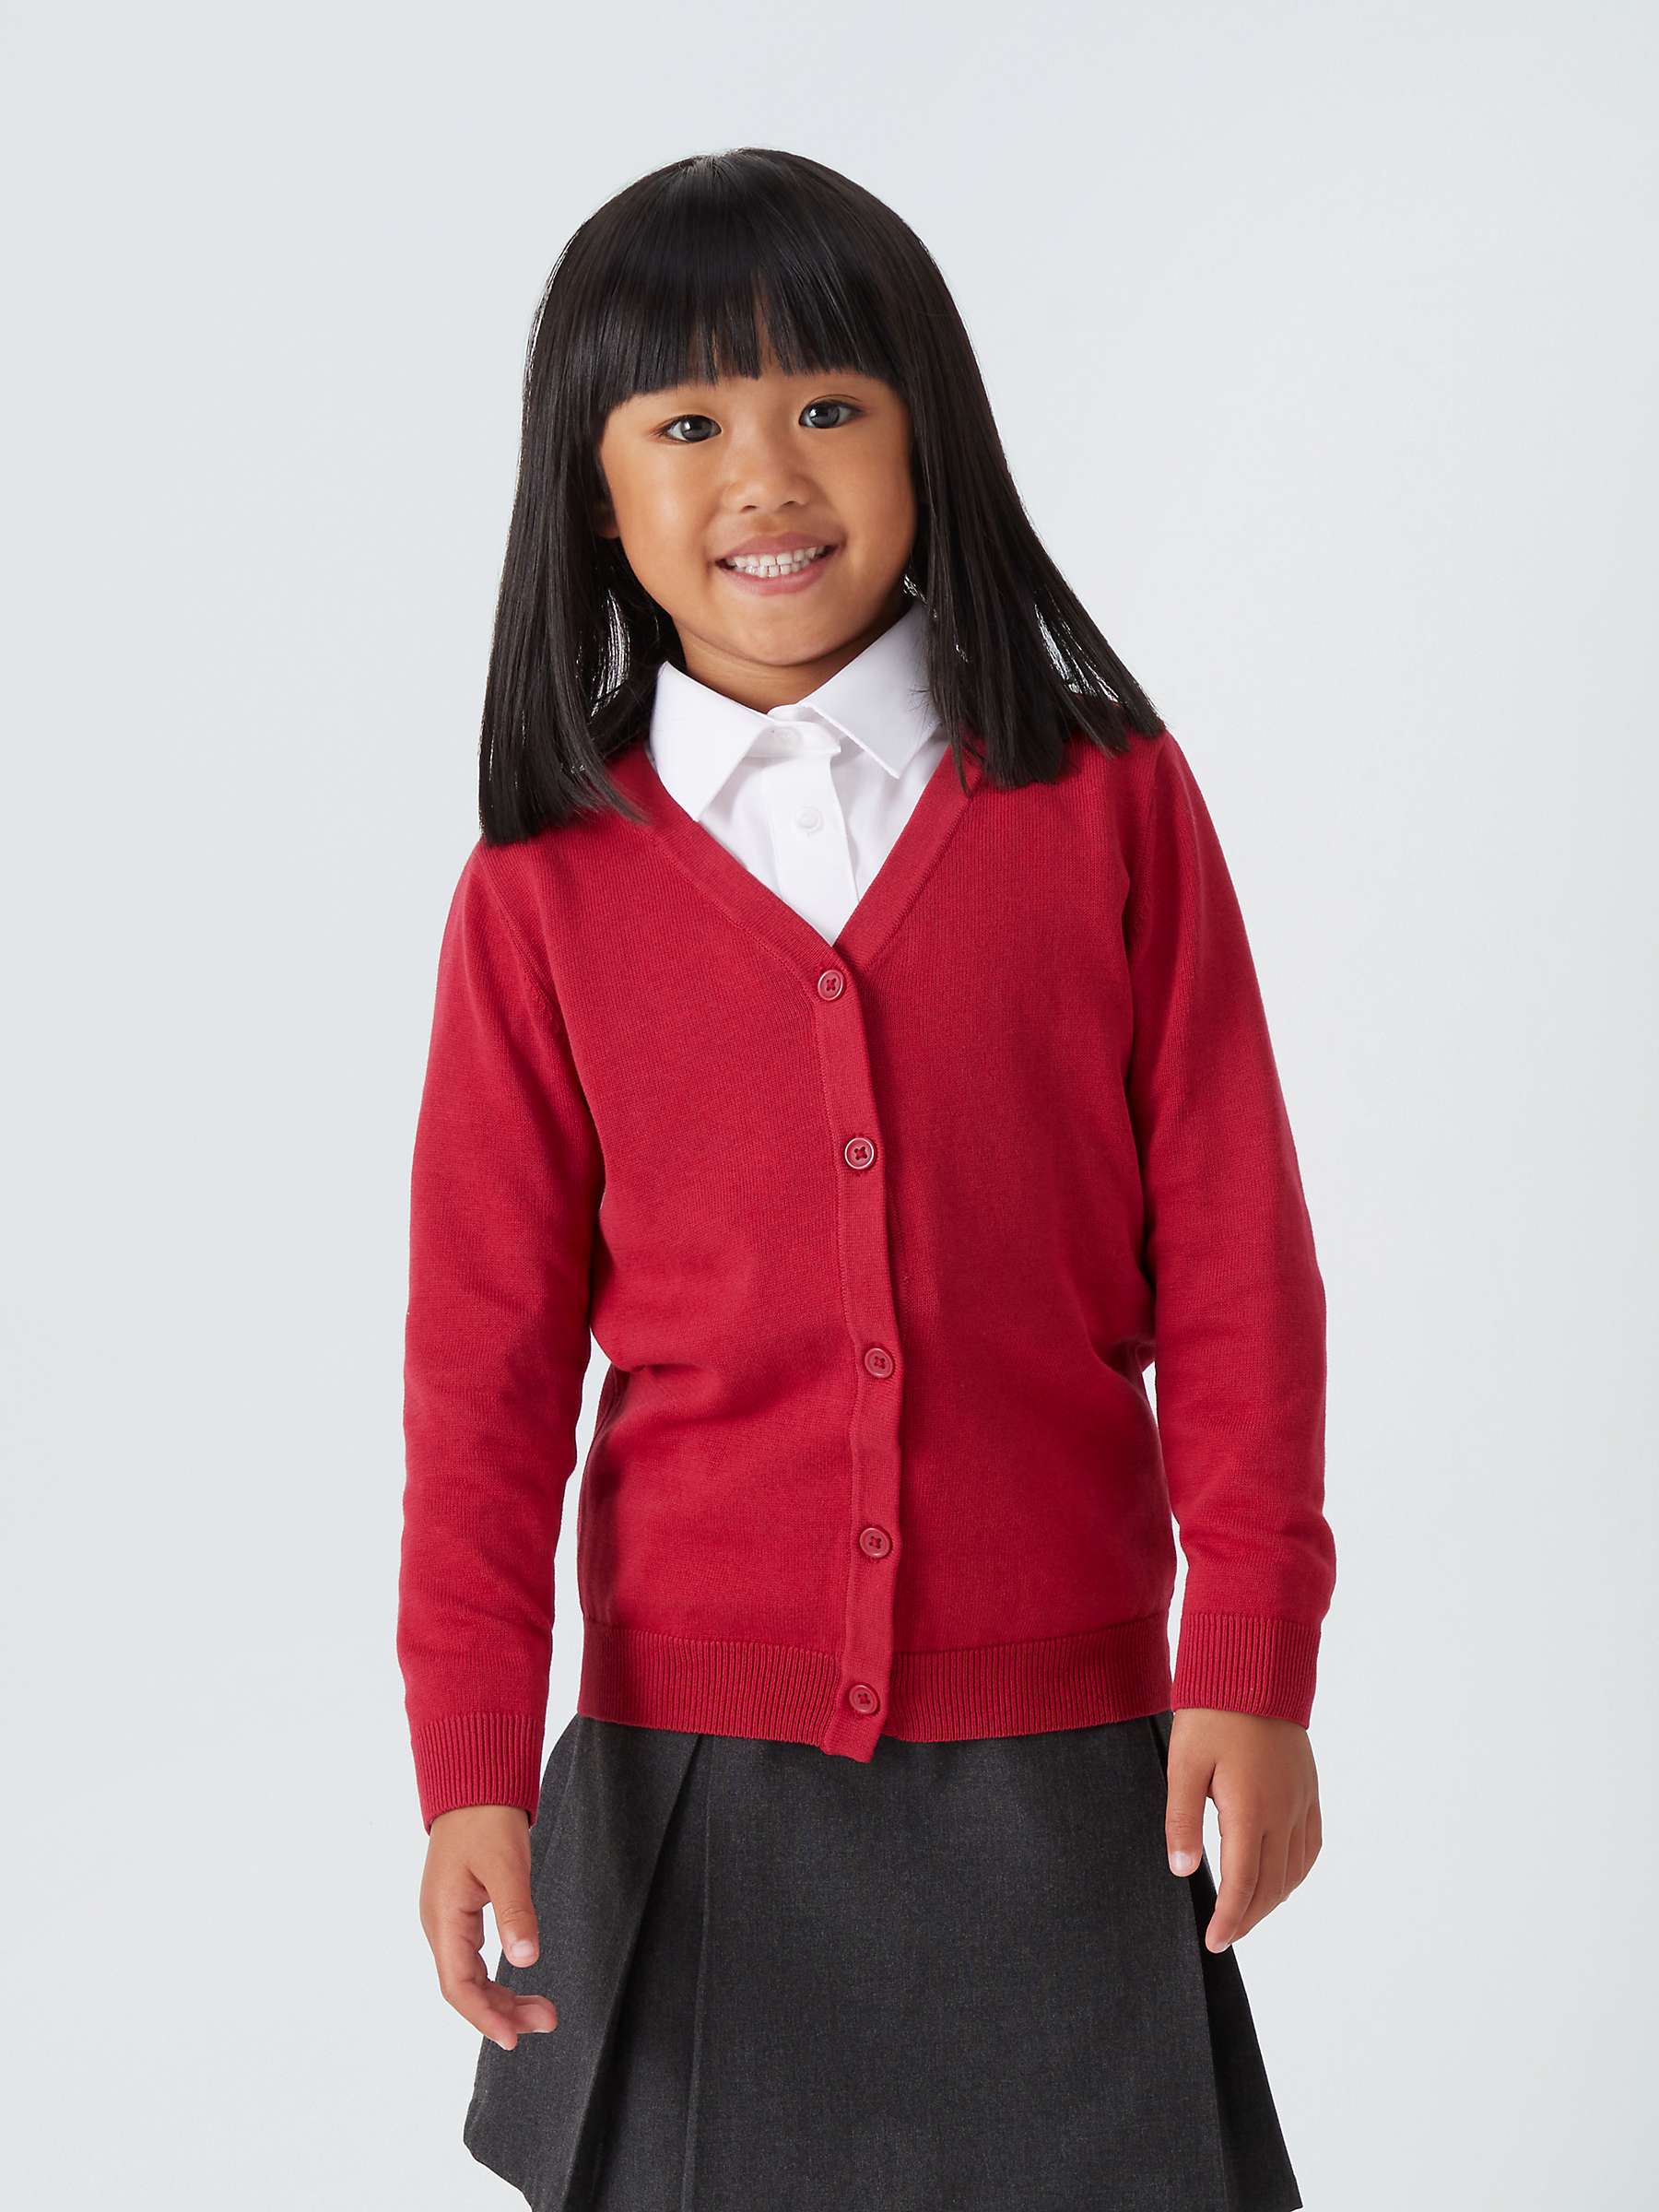 Buy John Lewis ANYDAY Unisex Cotton School Cardigan, Pack of 2 Online at johnlewis.com